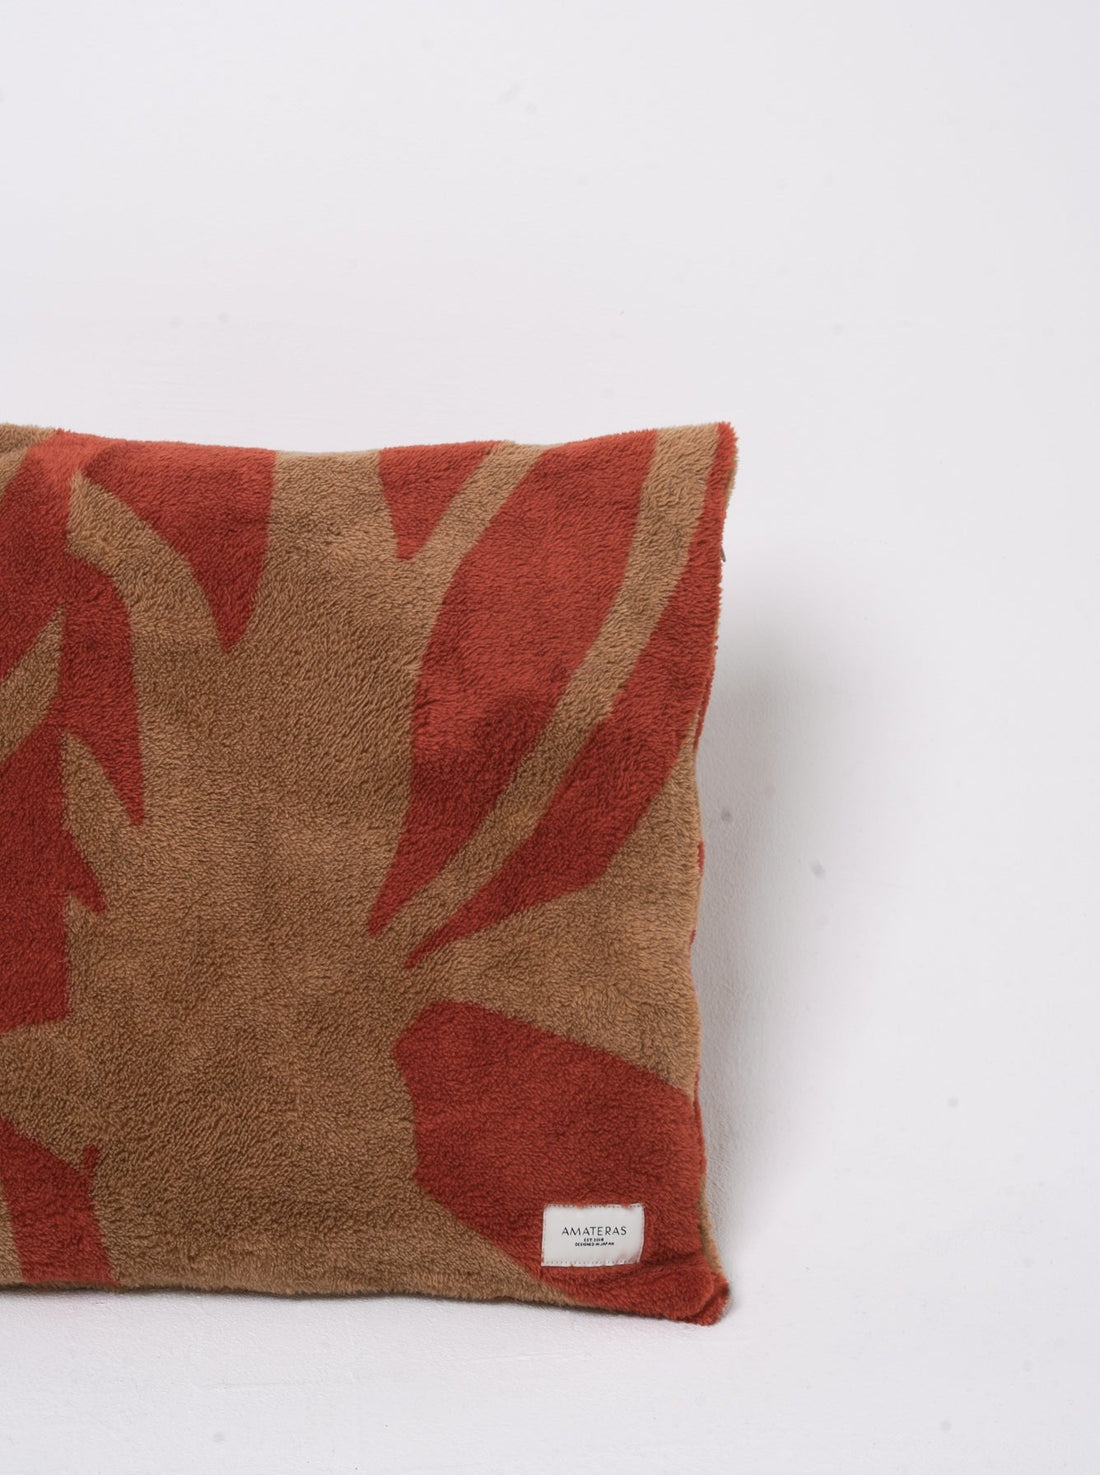 soft cushion cover / 枯茶(brown)